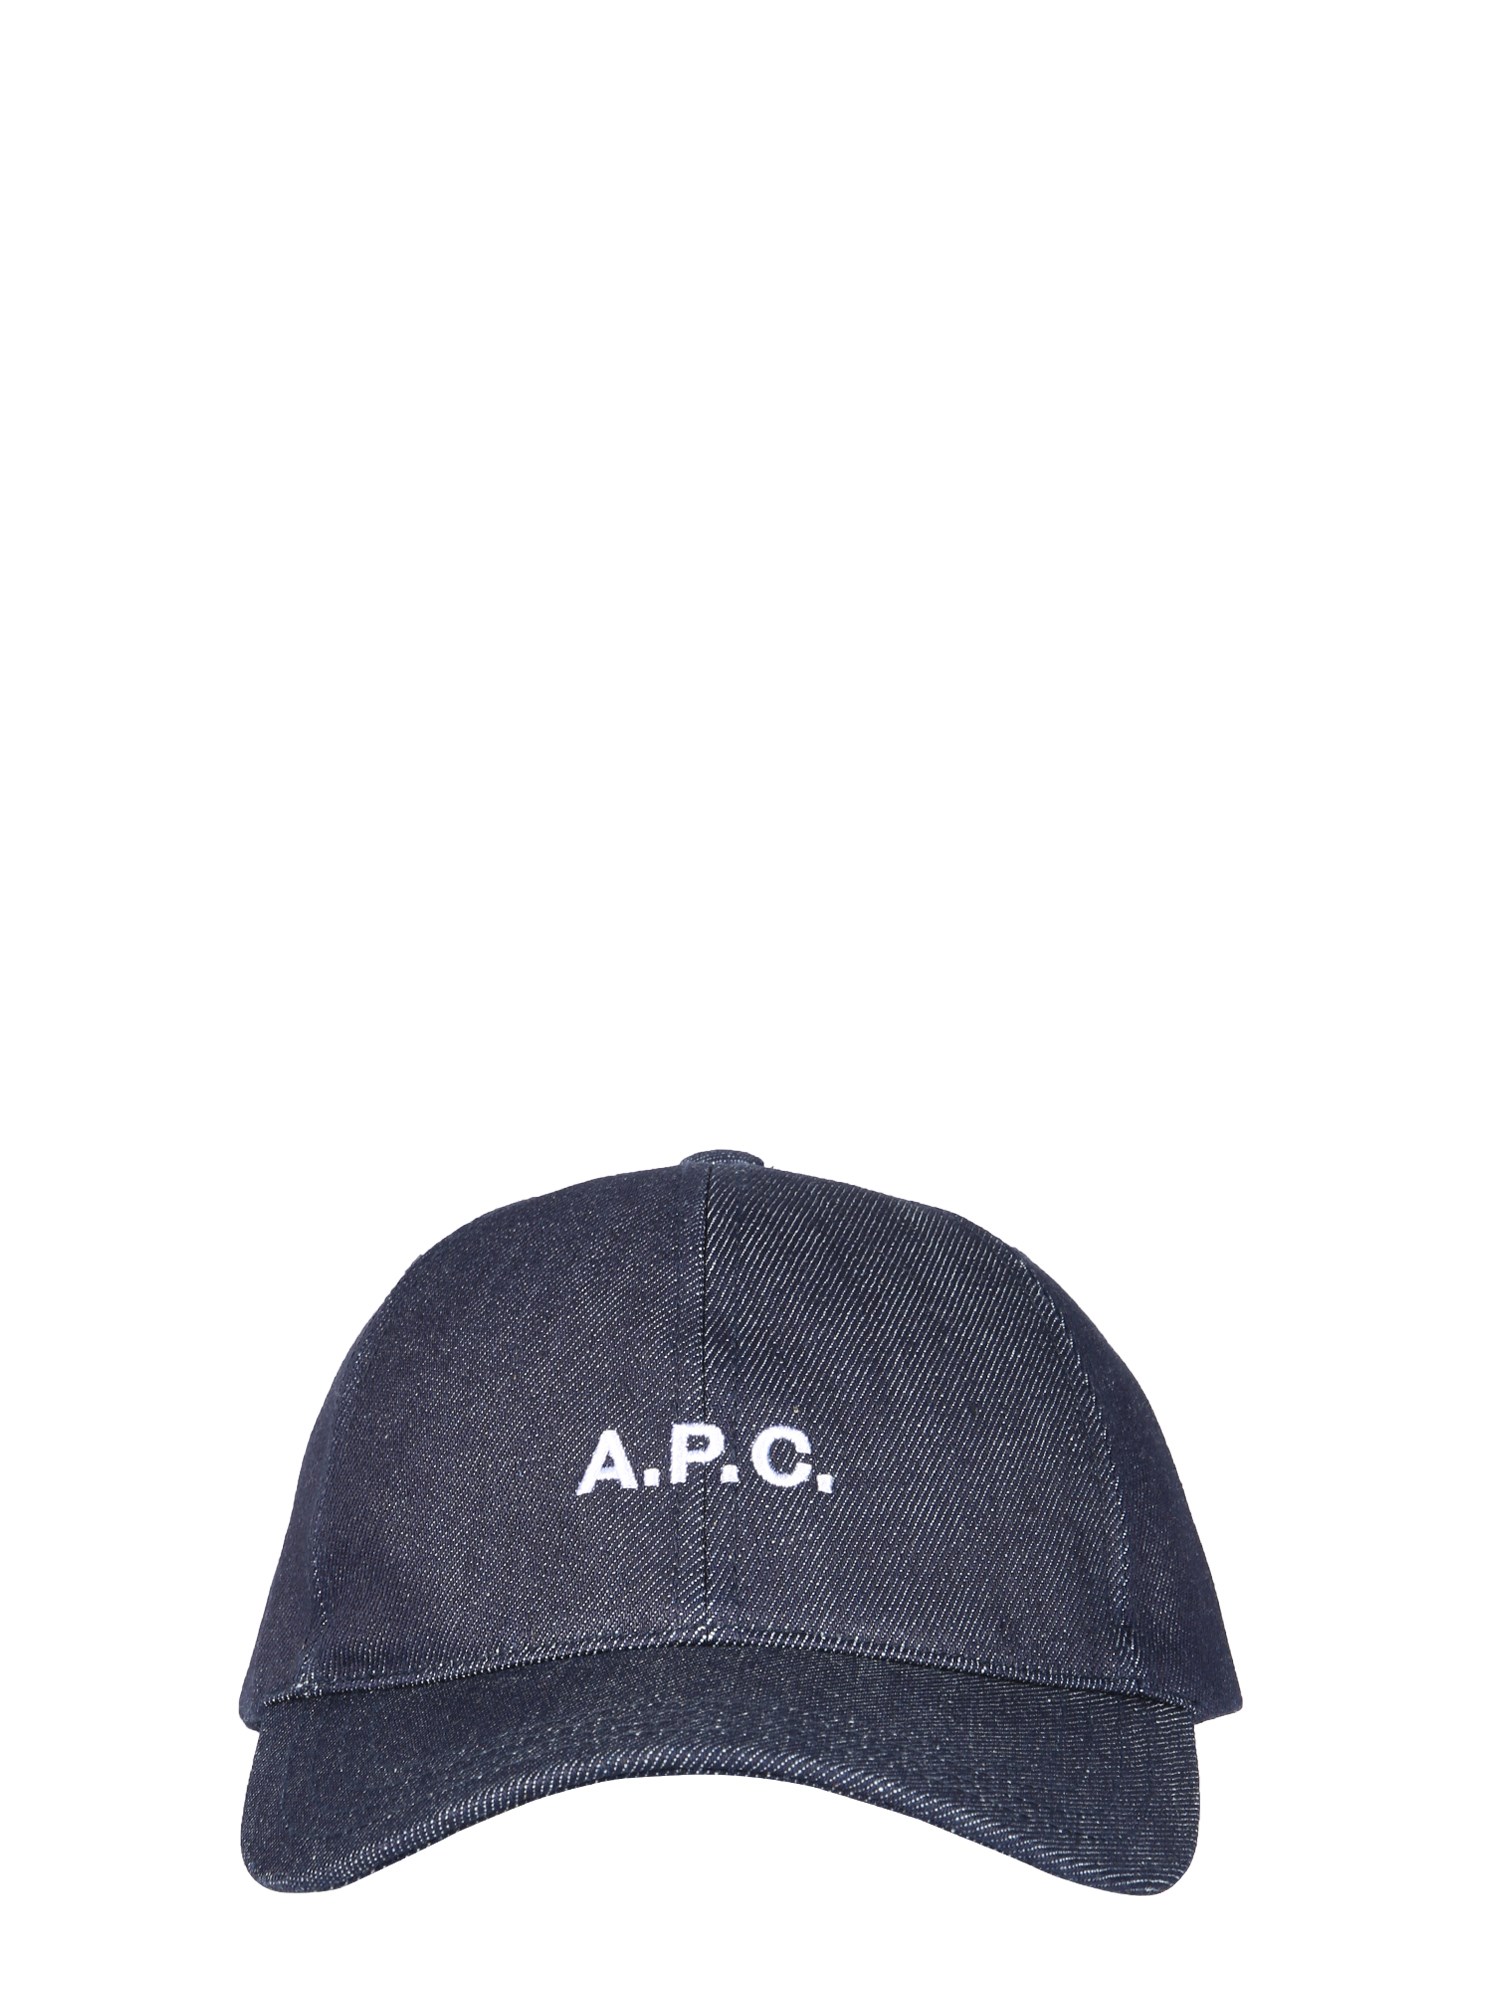 a.p.c. charlie baseball hat